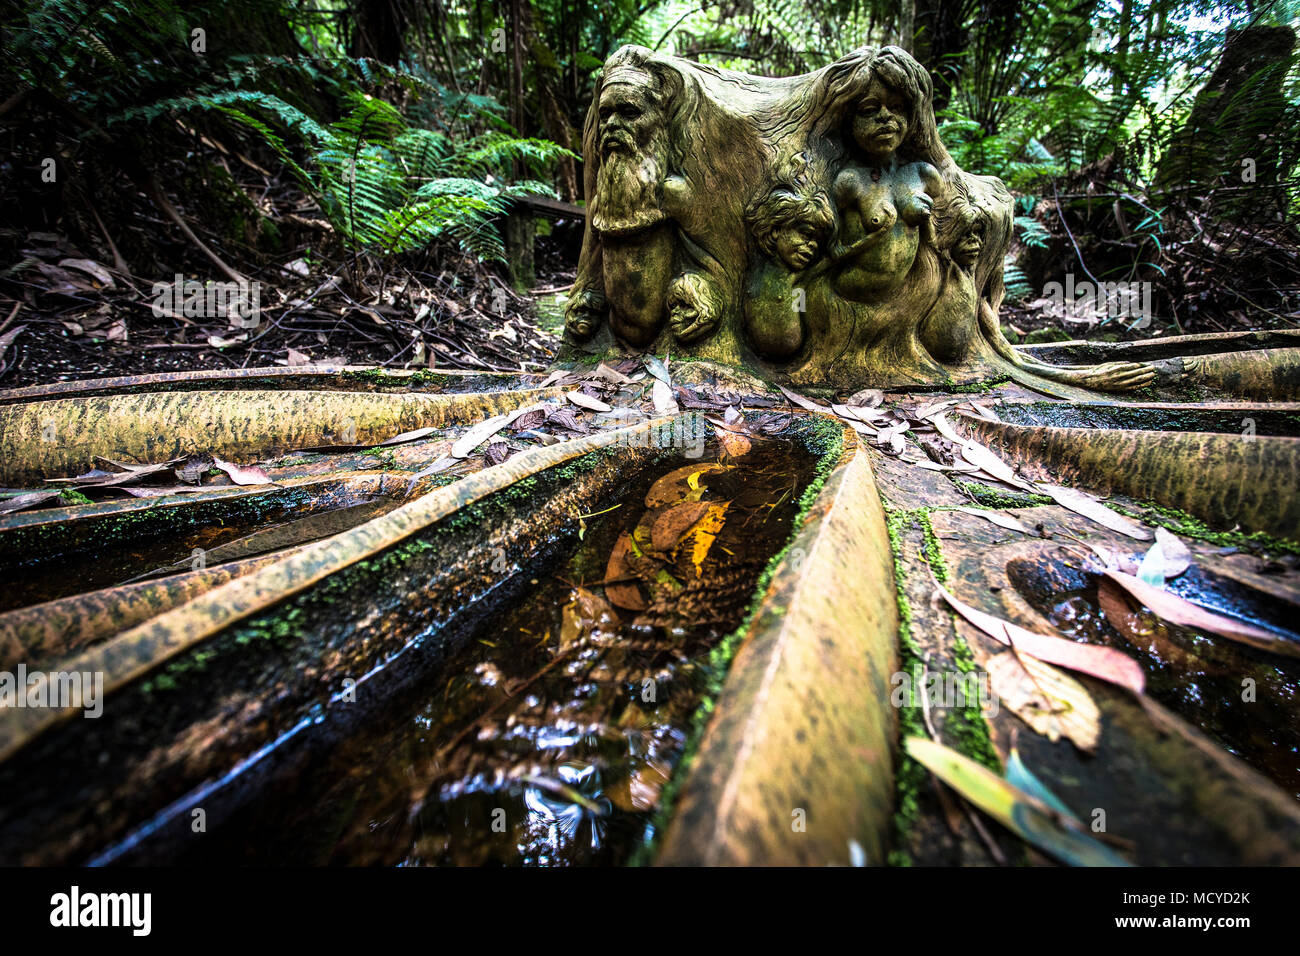 Figurine in forest of Dandenong mountain ranges of Melbourne Australia William Ricketts Australasia Stock Photo